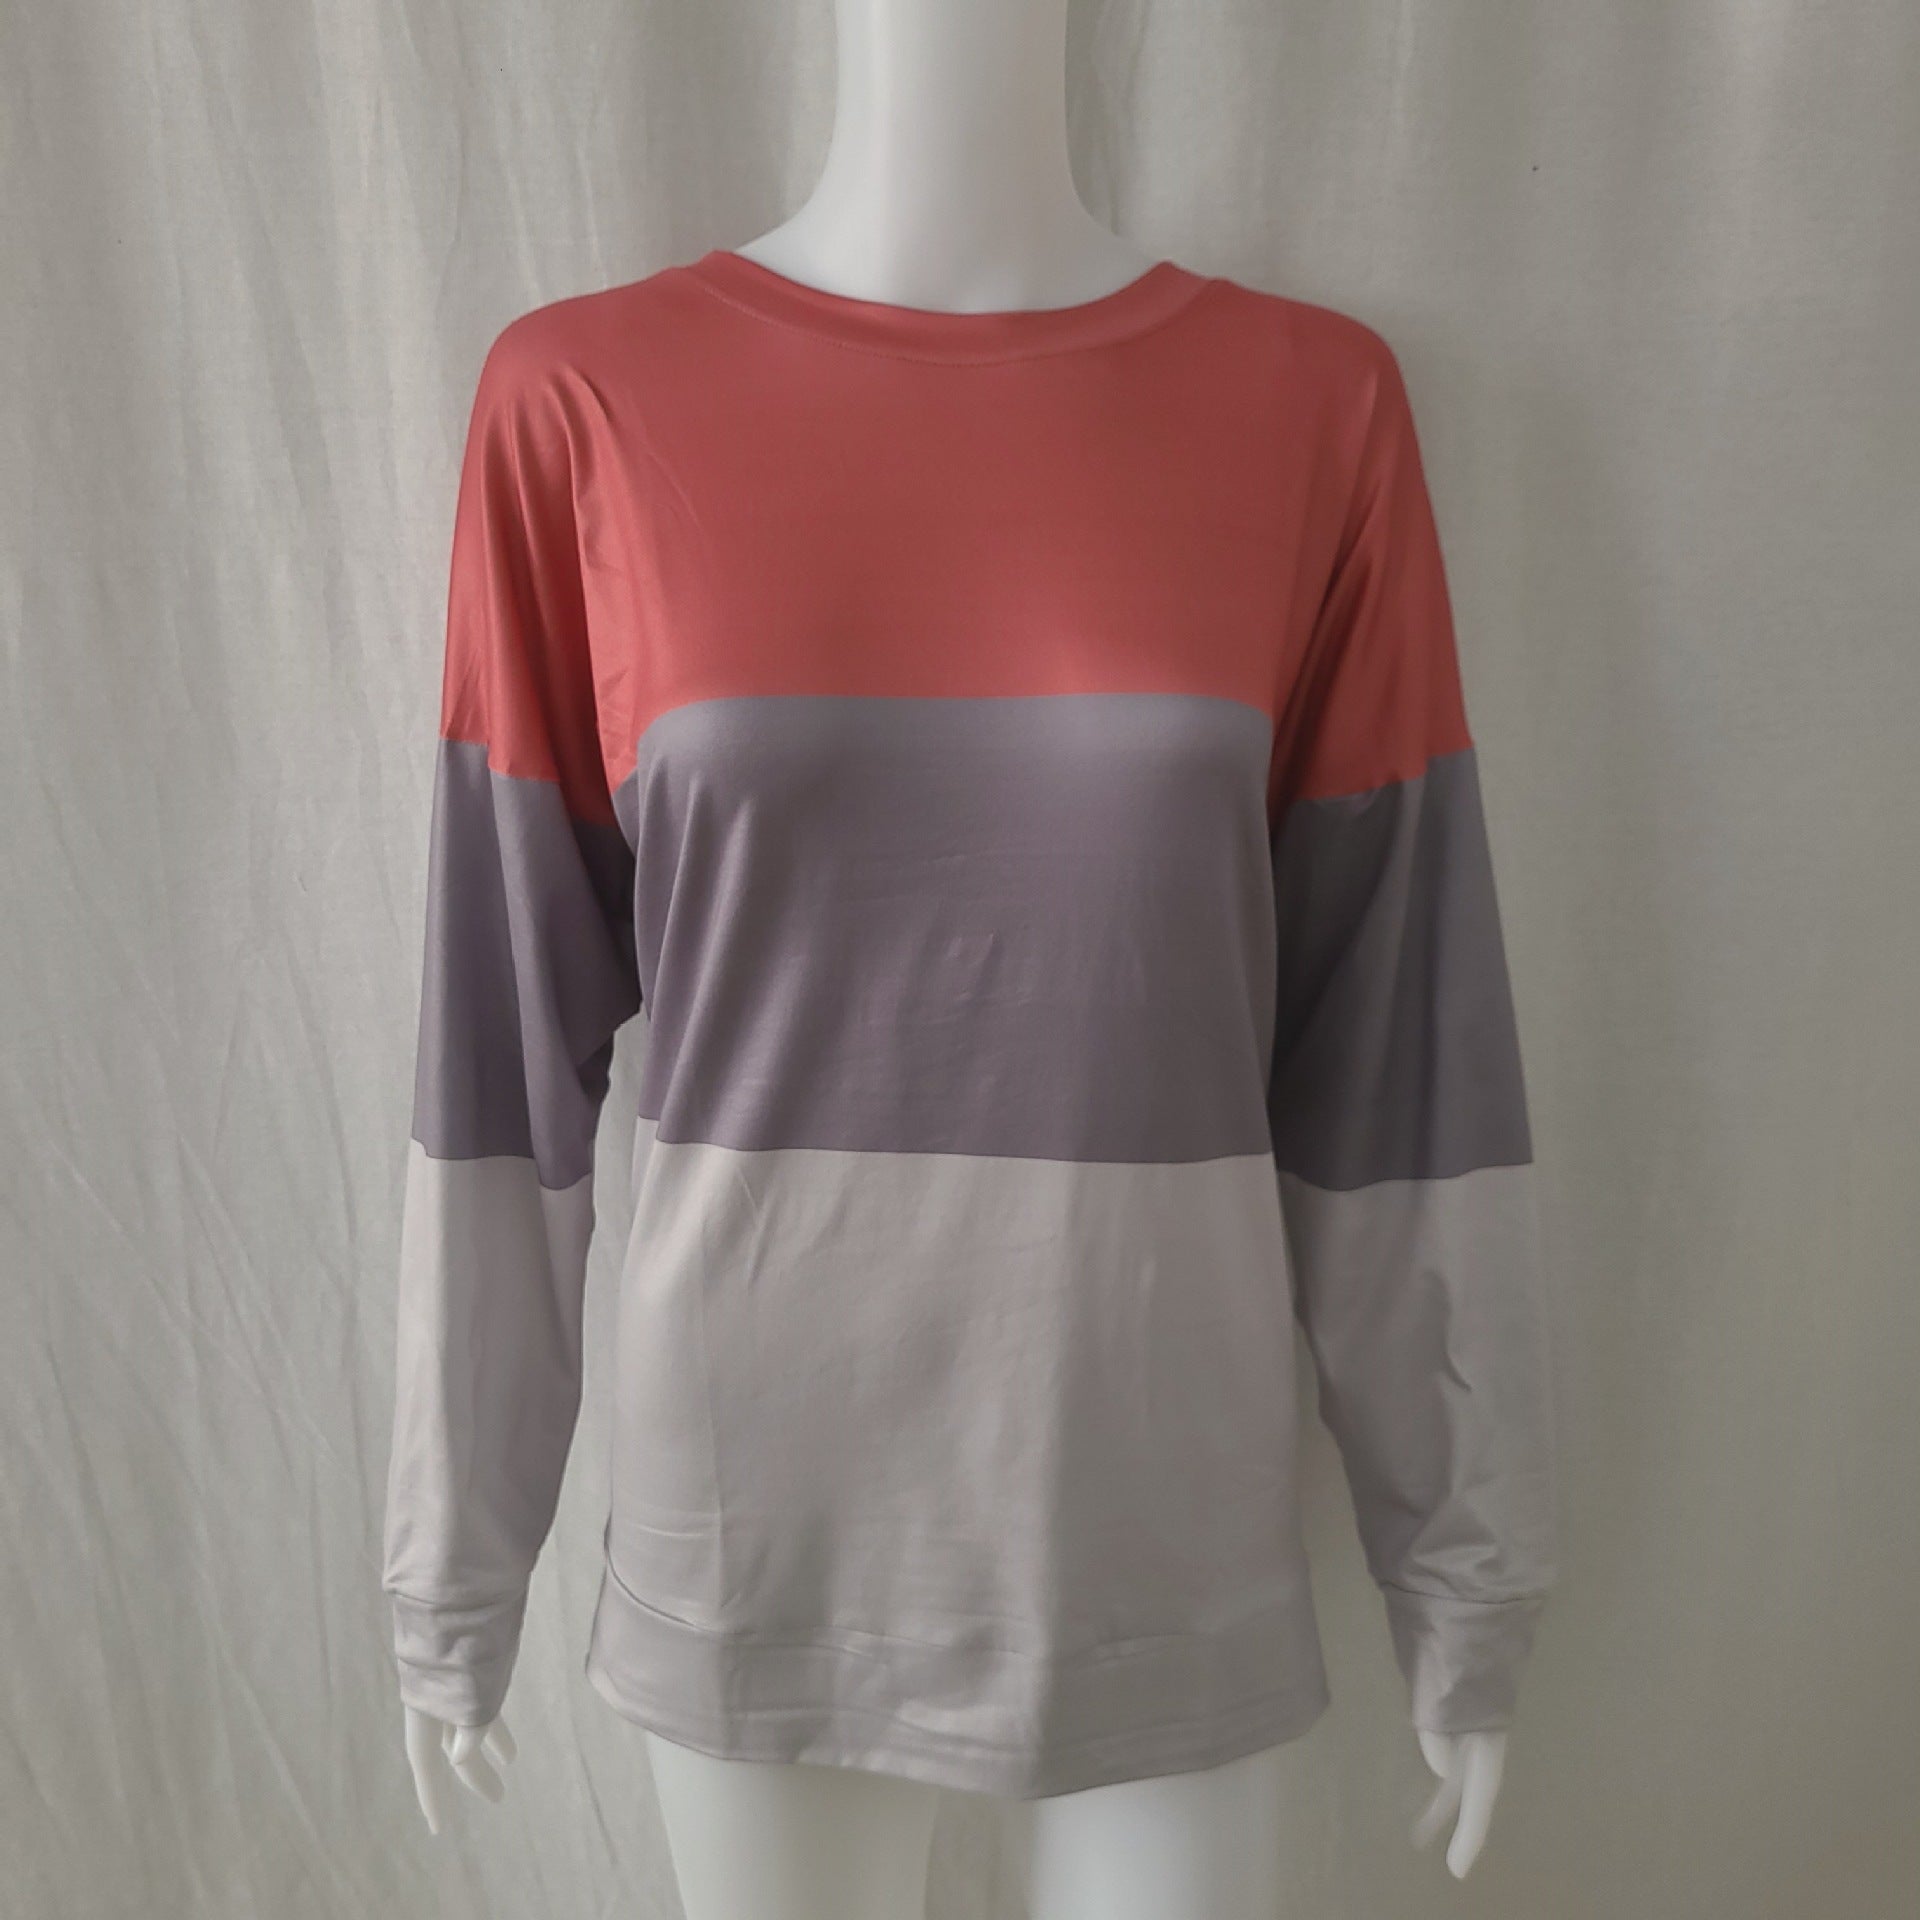 Women's Sweater Stitching Color Urban Leisure Top Round Neck Long Sleeve Loose Sweatshirt